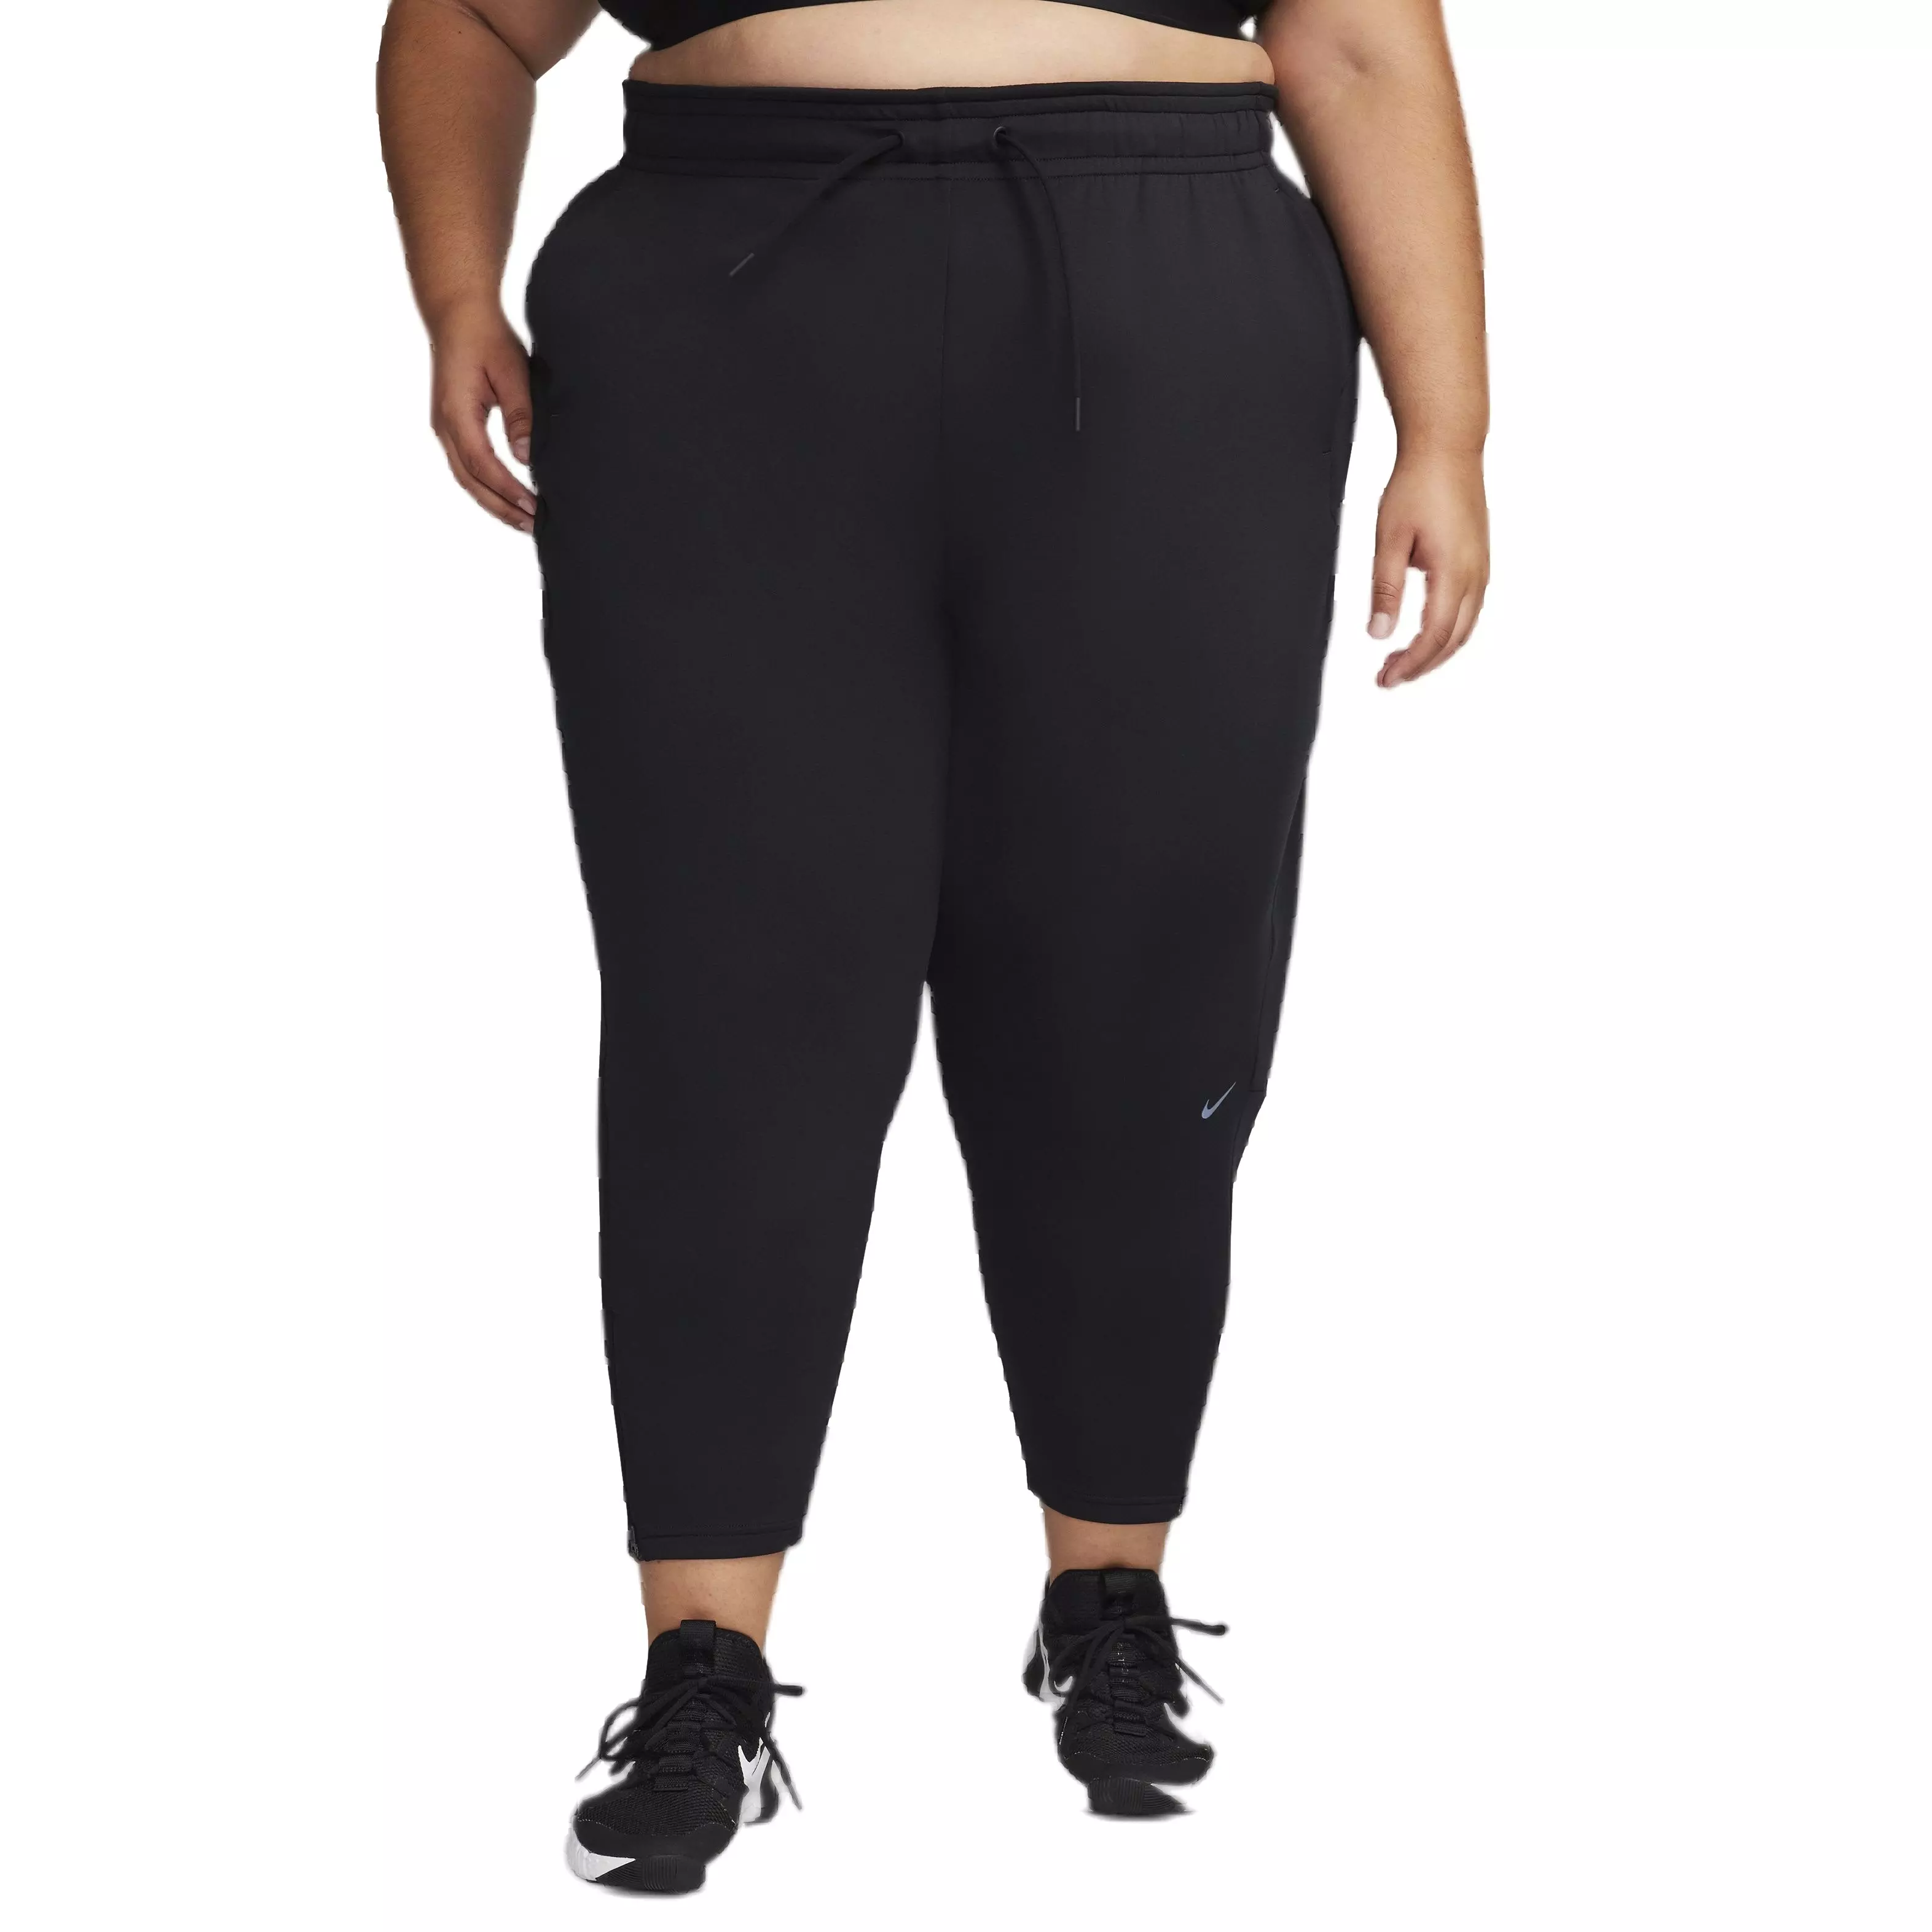 Nike Women's Dri-Fit Classic Fit Training Pants-Black 